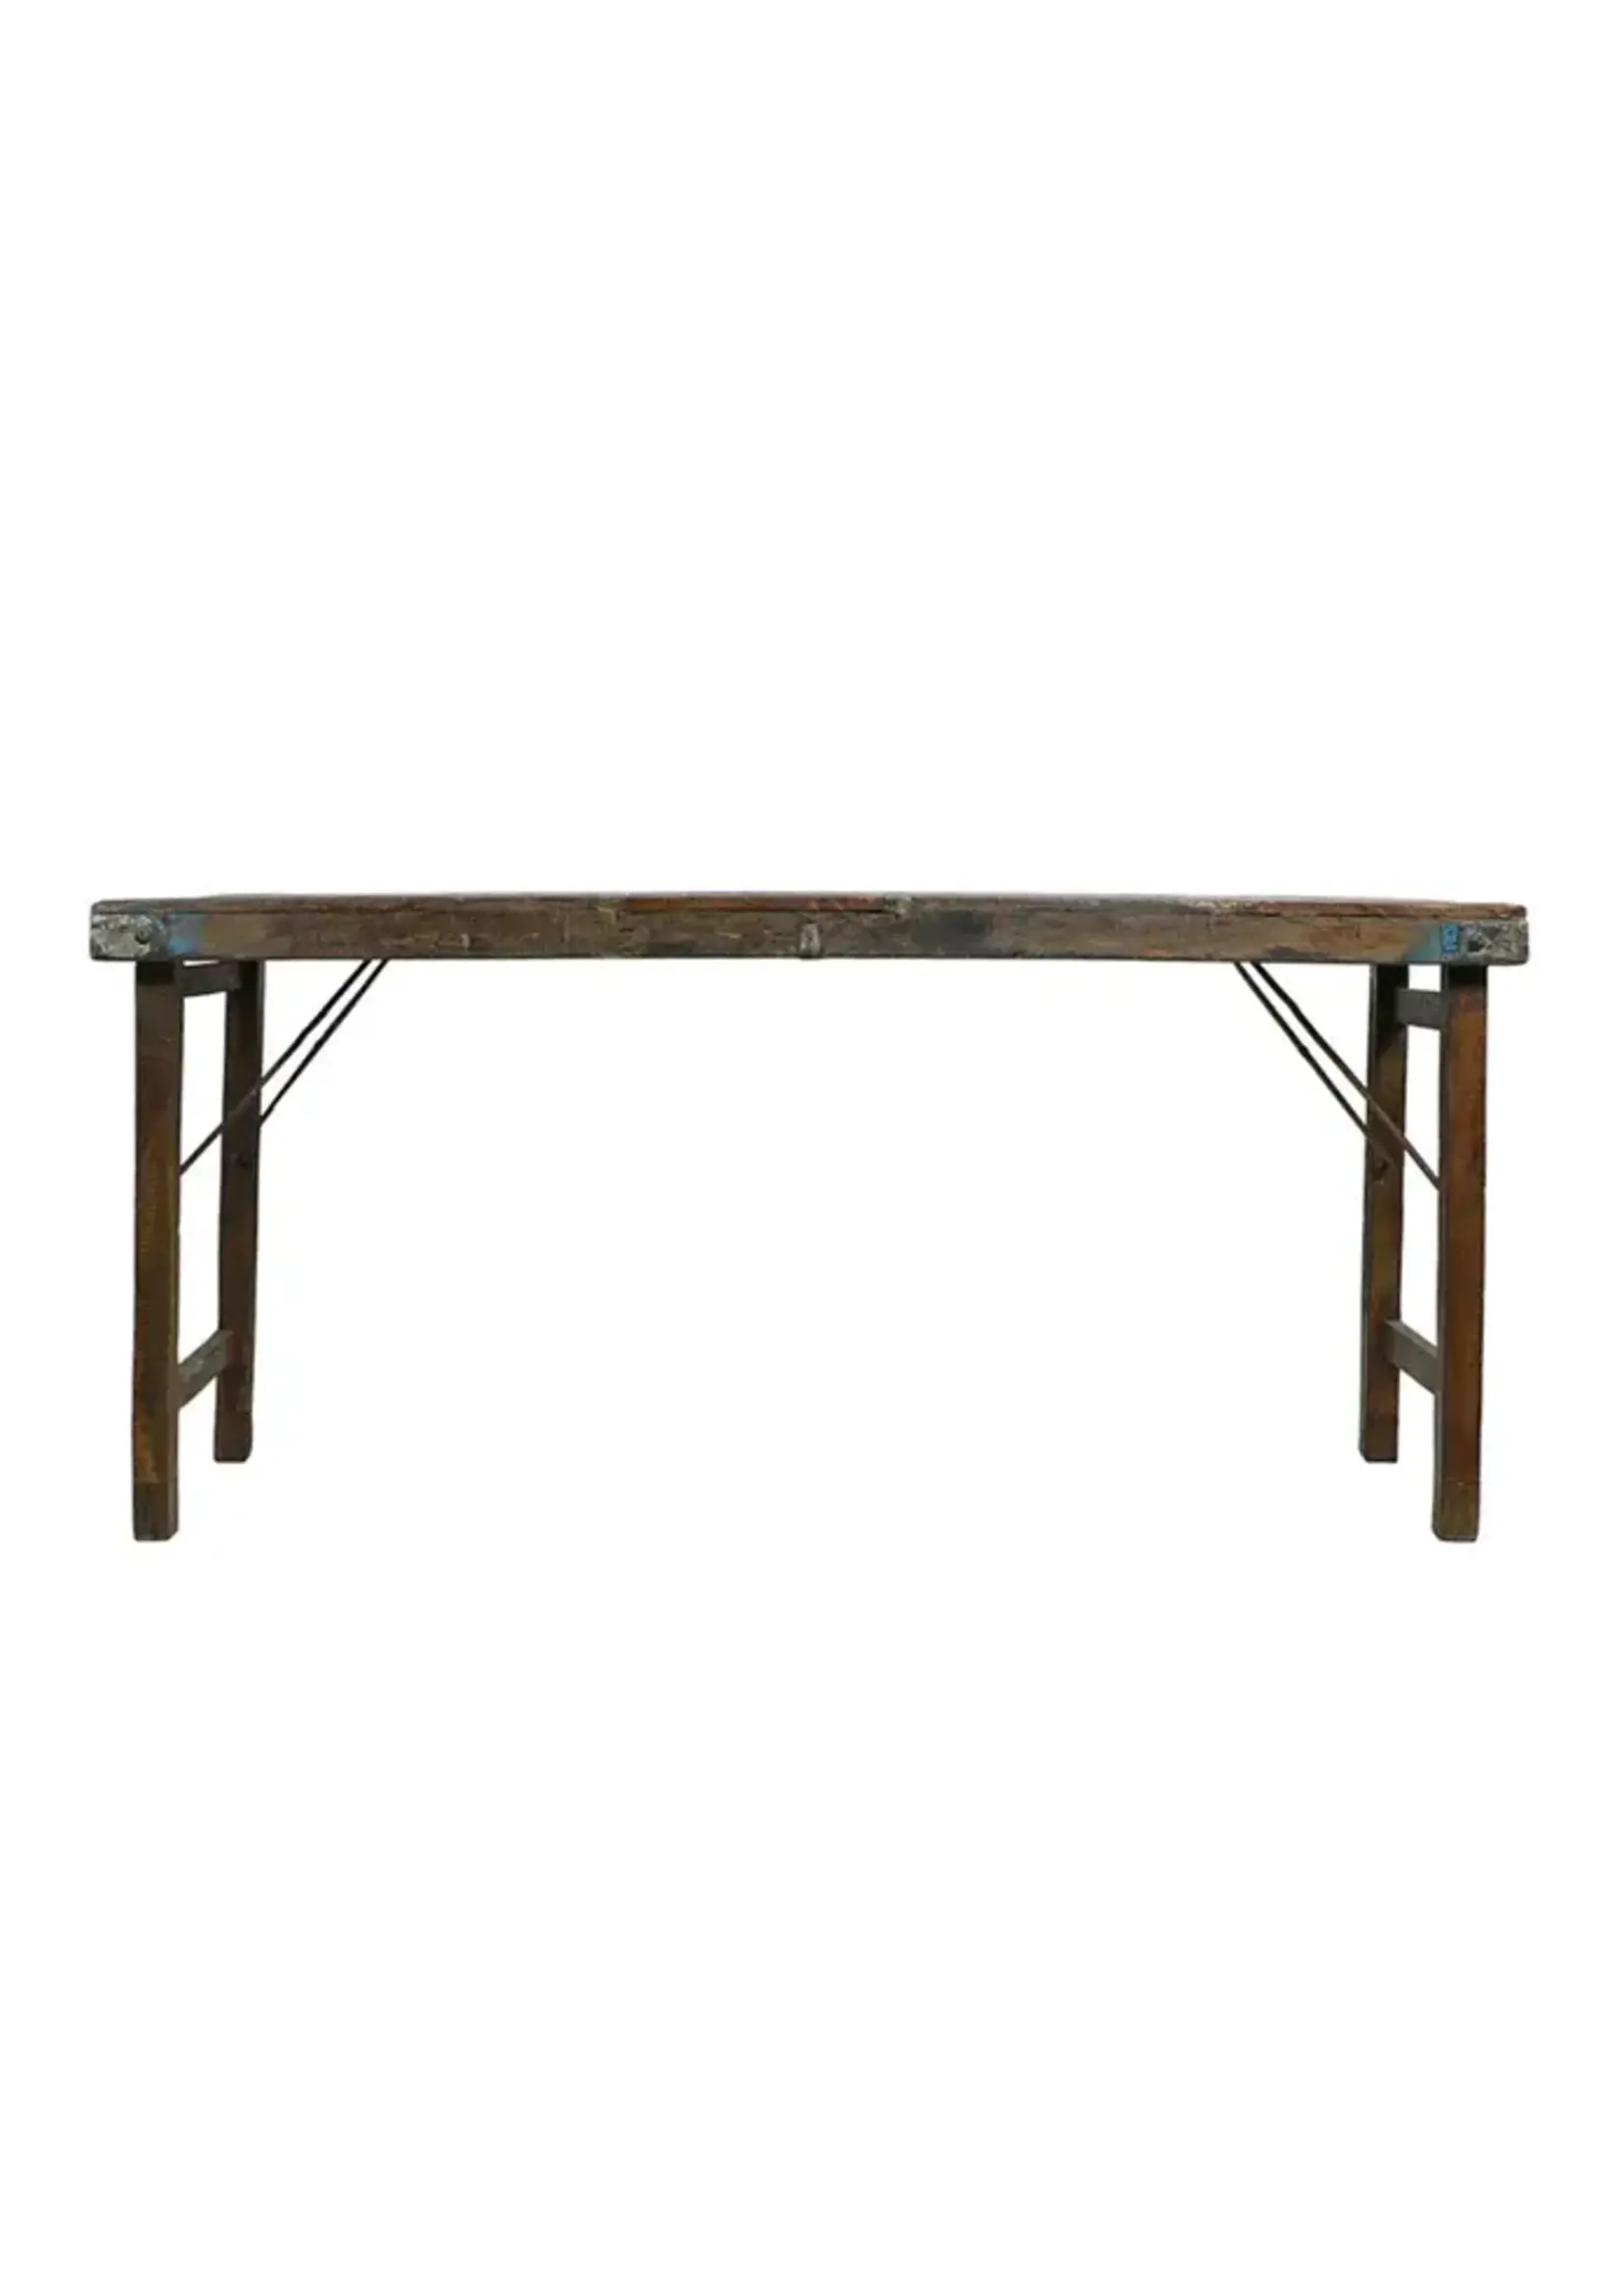 Wood Wedding Table-Dark Large 69"W